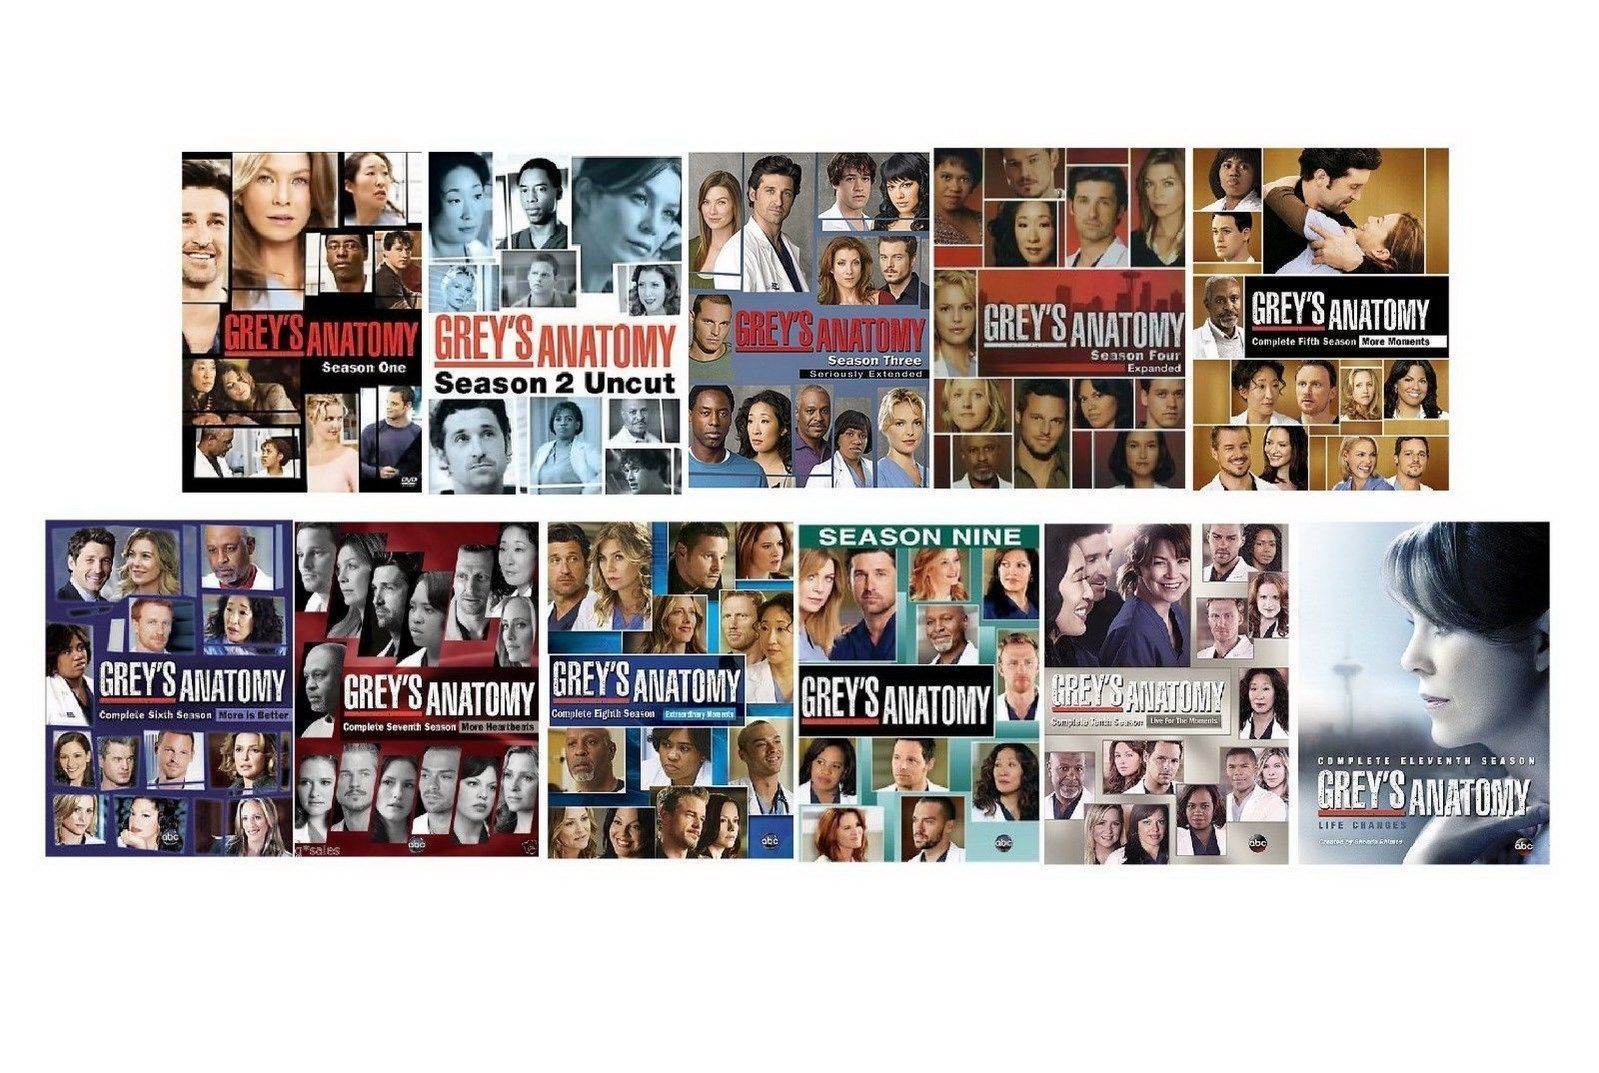 Greys Anatomy season 4 - Wikipedia